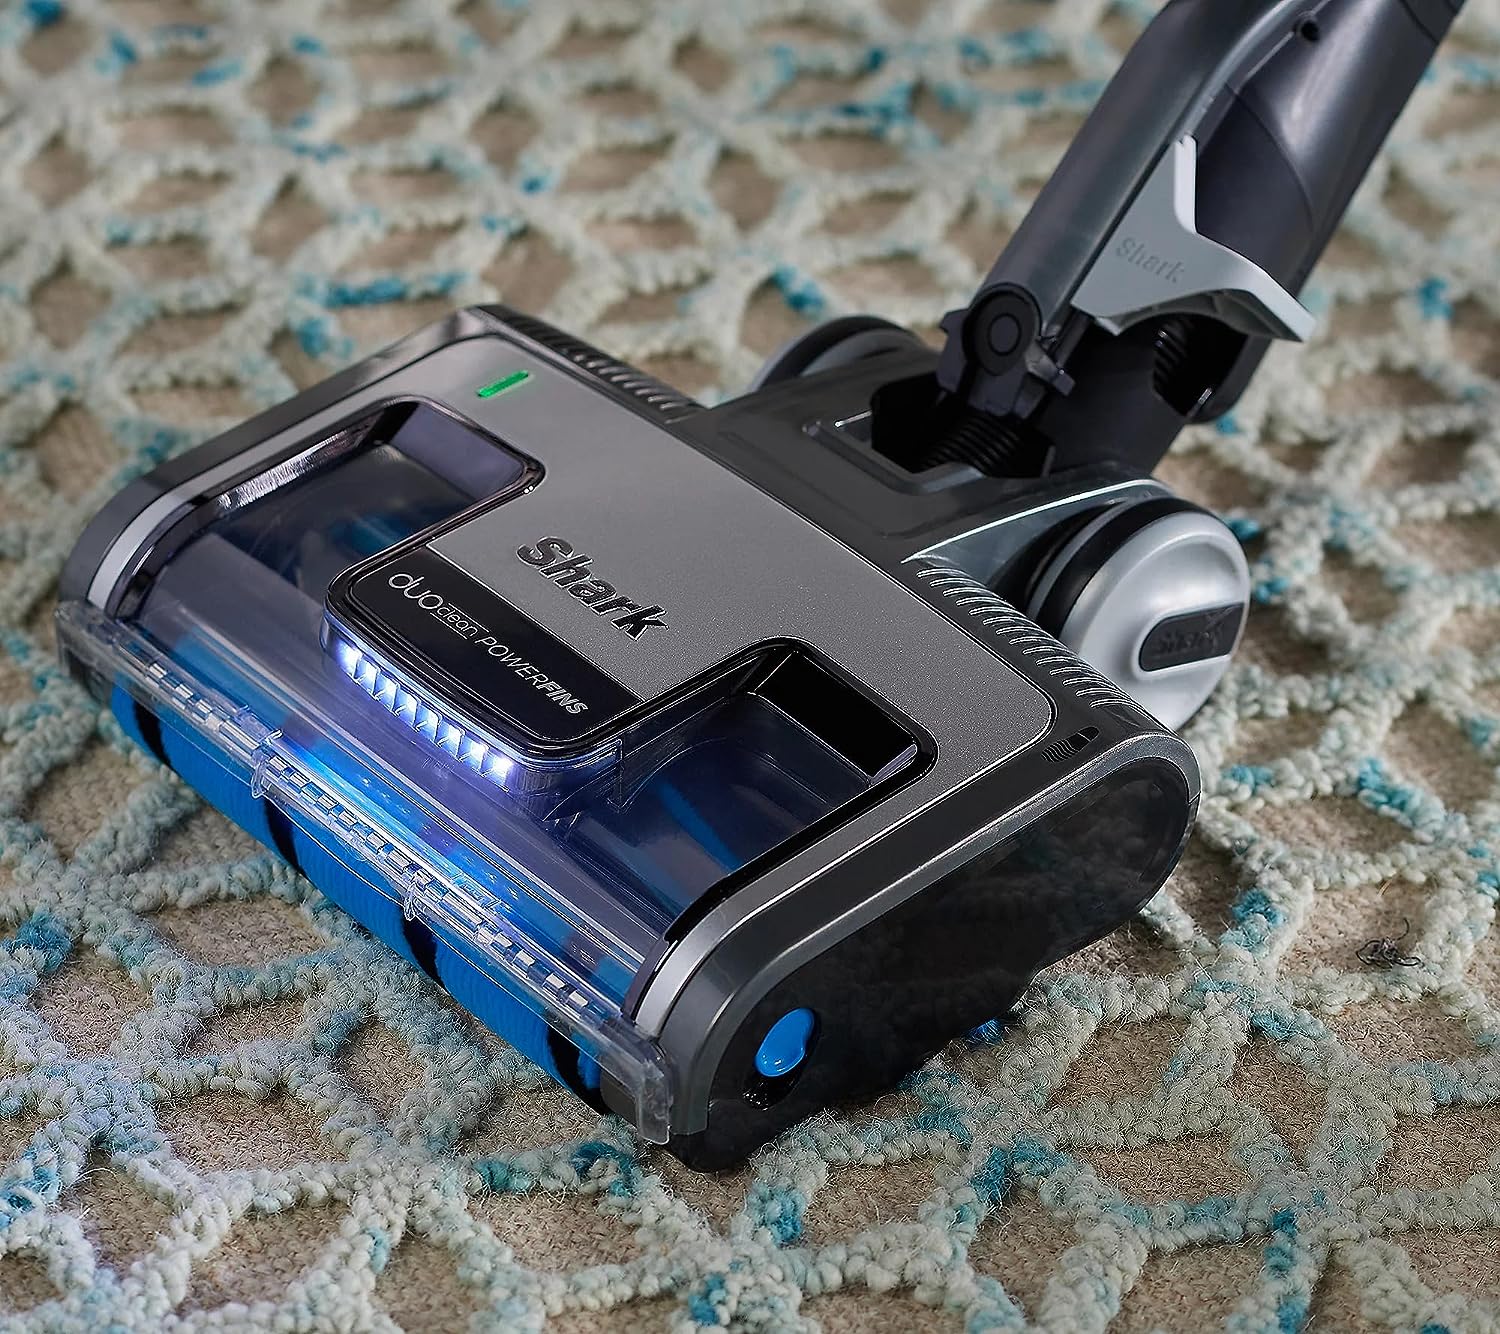 Shark Vertex Corded Ultralight DuoClean PowerFins Stick Vacuum with Self-Cleaning Brushroll (Renewed) (Mint)